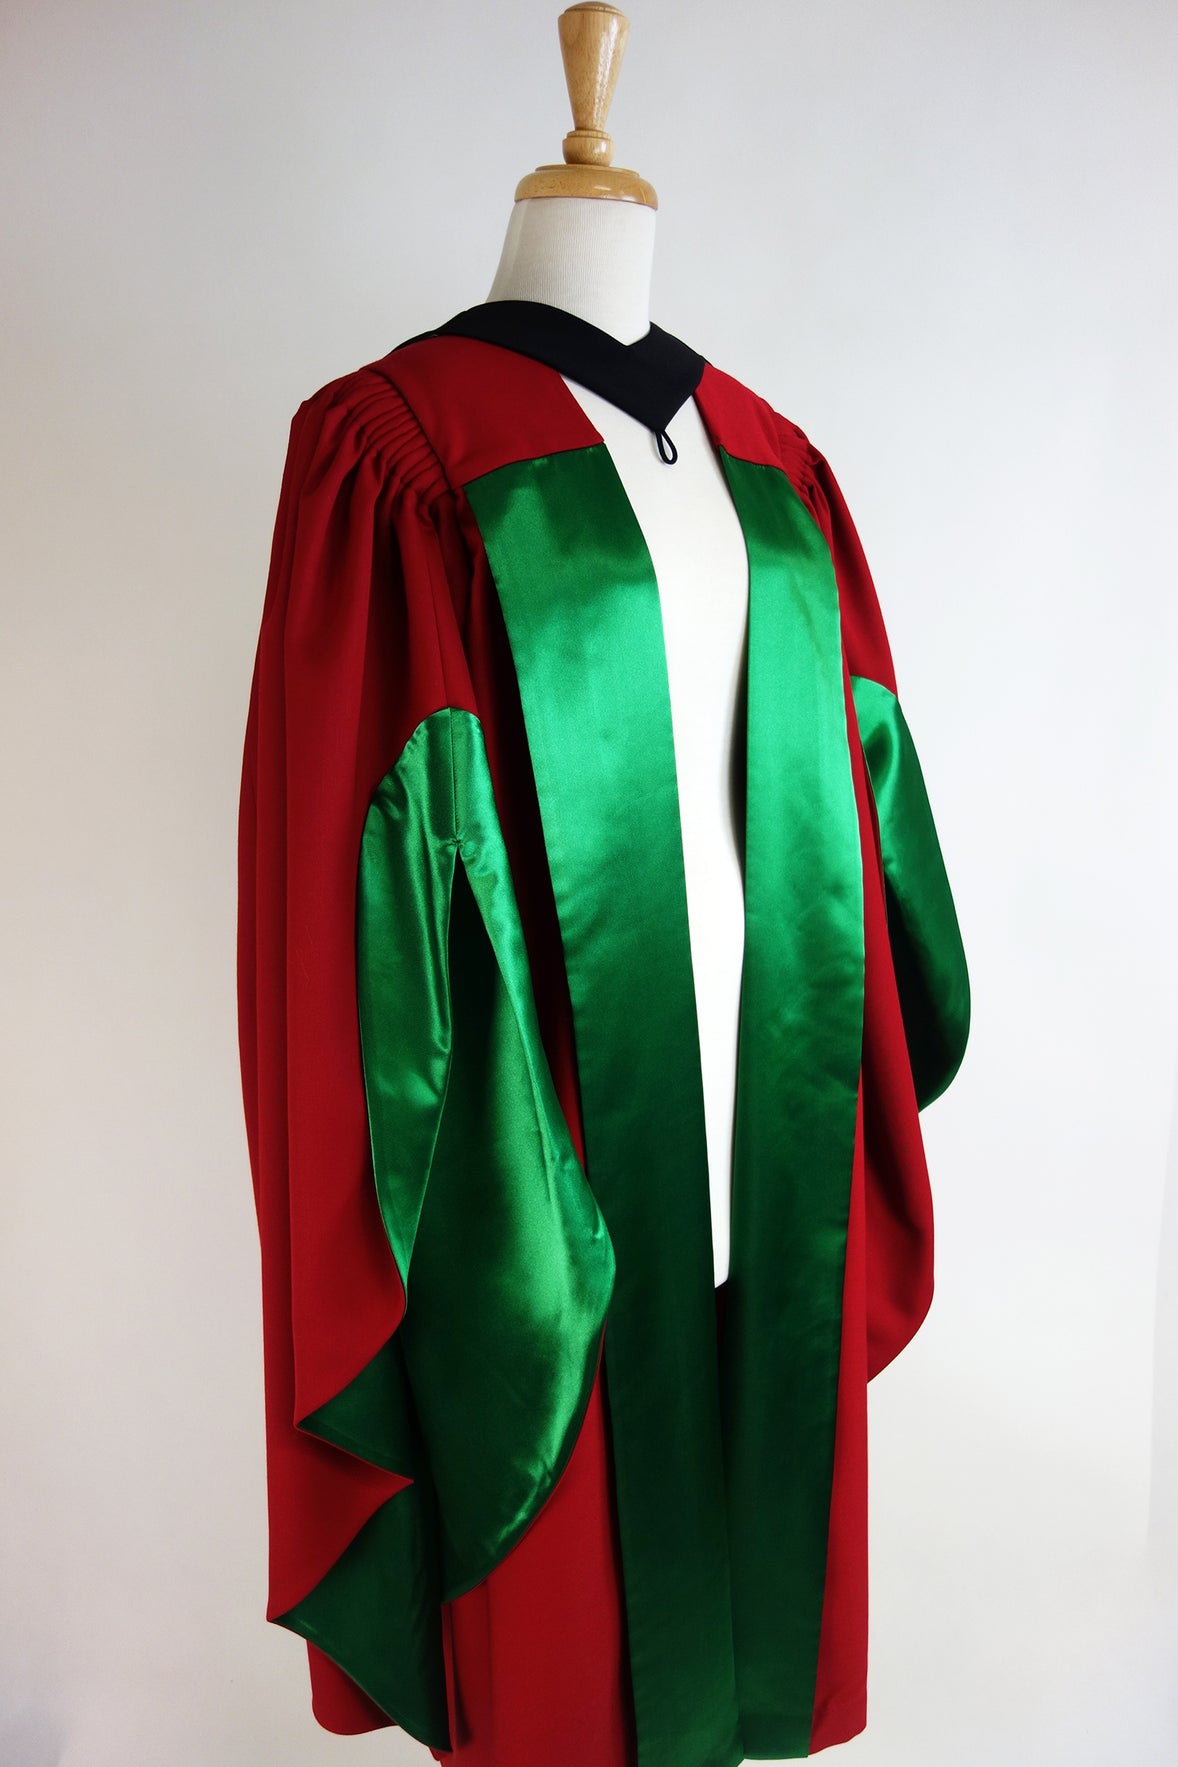 University of Melbourne Doctoral Graduation Gown Set - Gown, Hood and Bonnet